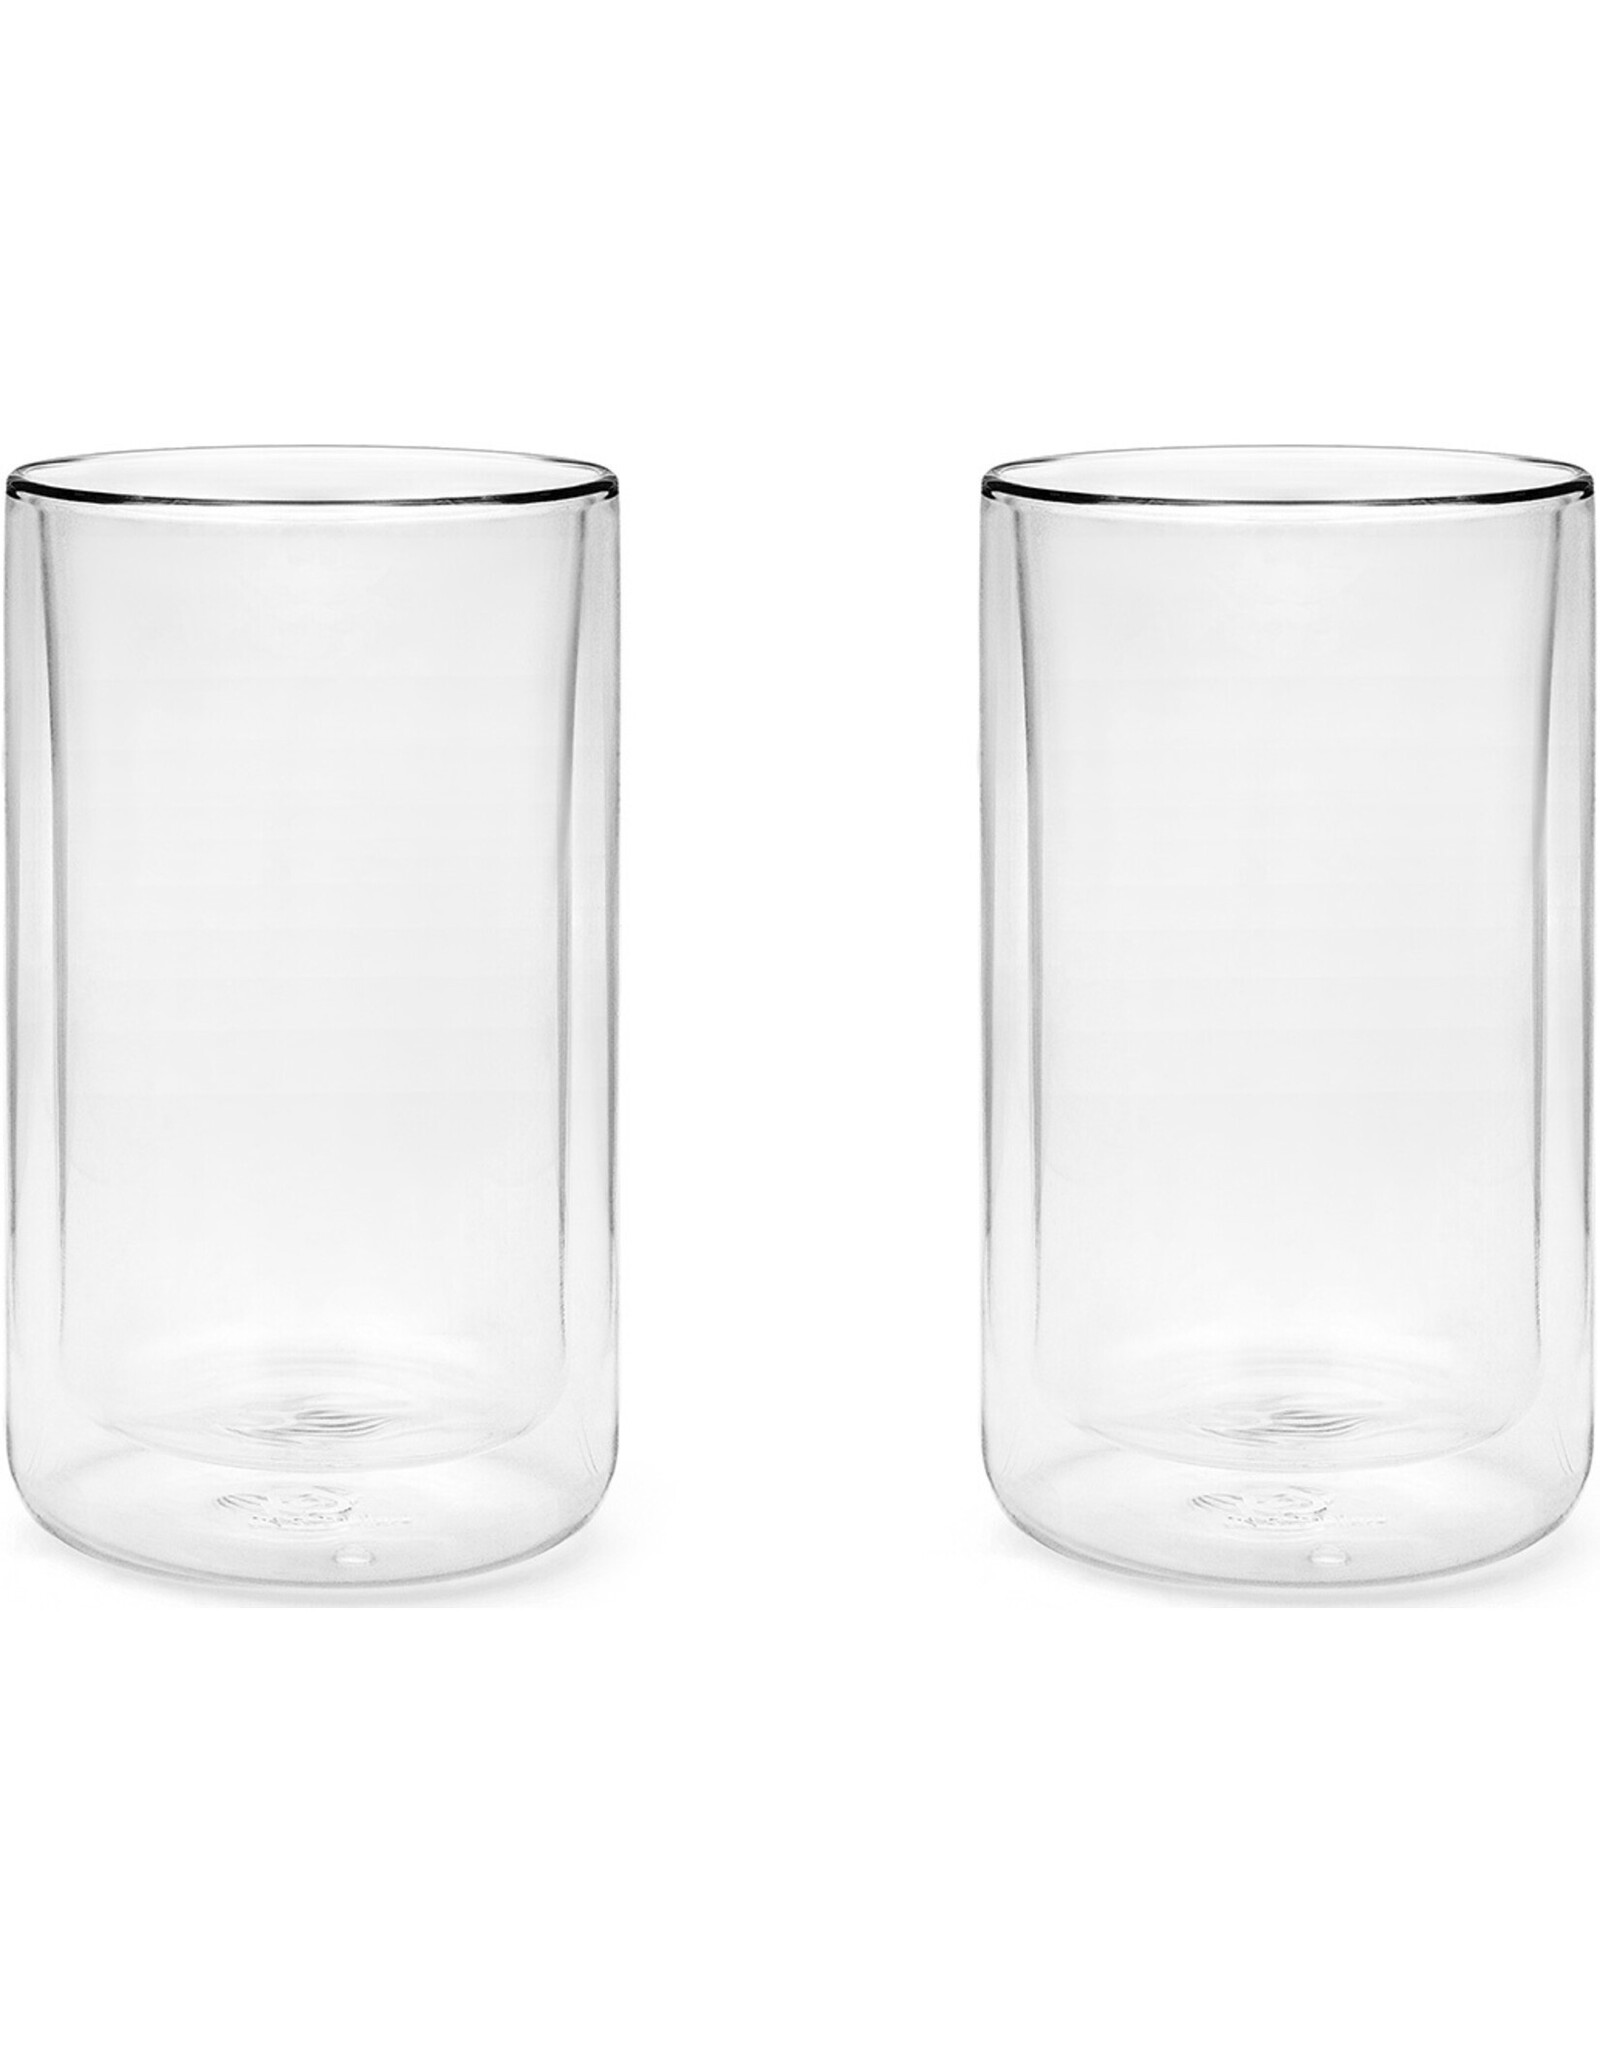 bredemeijer Bredemeijer Dubbelwandig glas San Remo 400 ml, 2 stuks